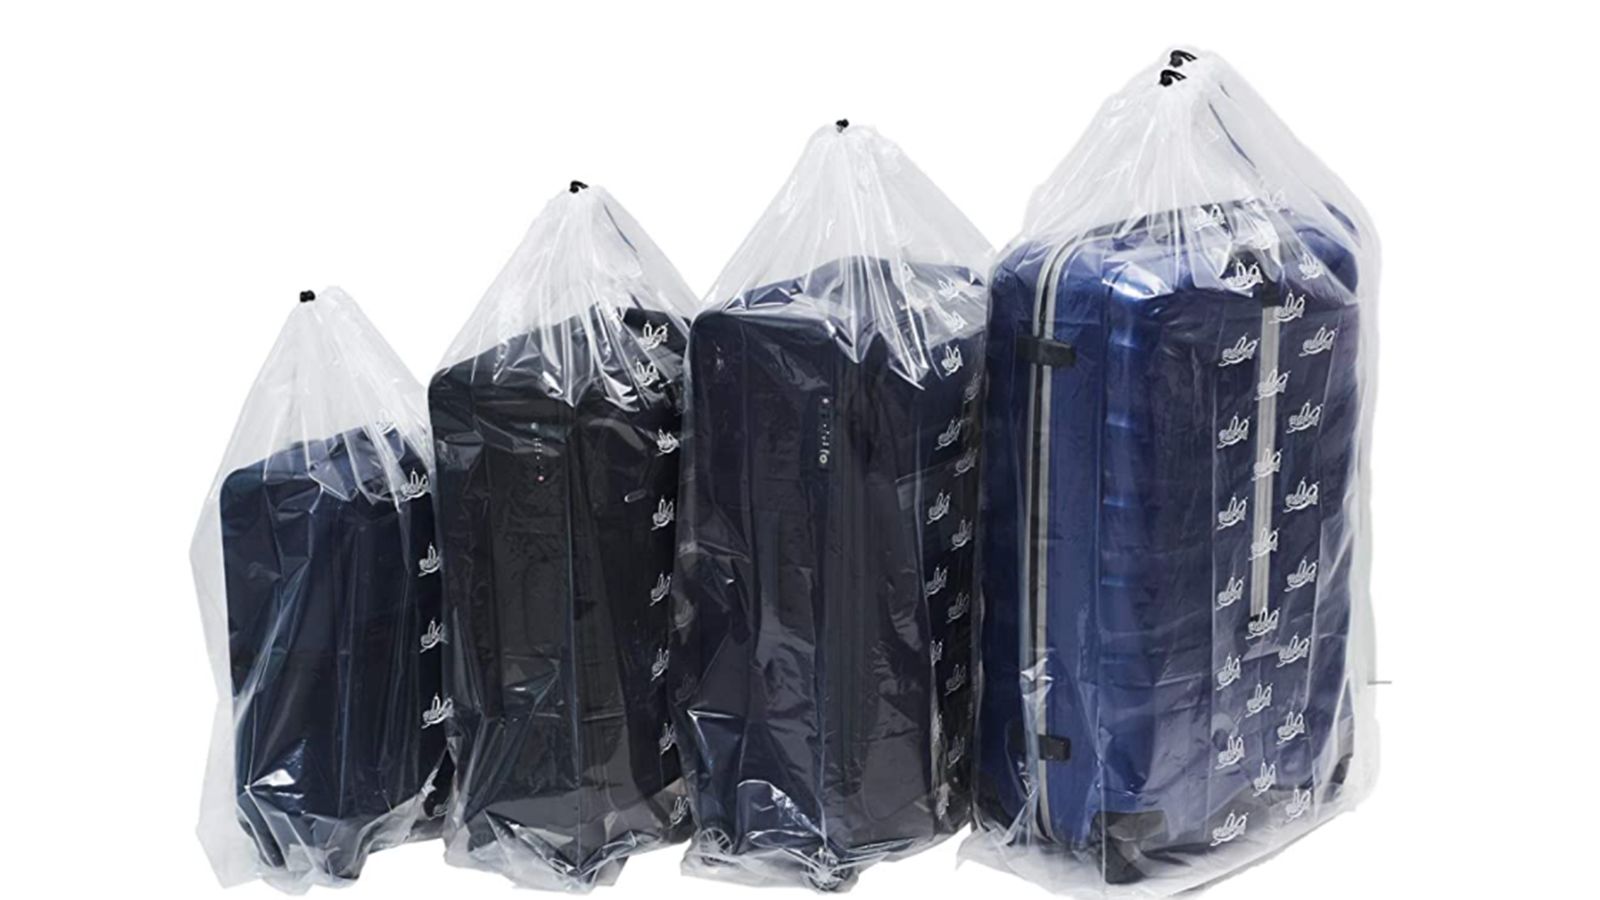 https://media.cnn.com/api/v1/images/stellar/prod/211011132552-luggage-organization-under-20-dust-cover-big-plastic-drawstring-bags-for-storage-and-luggage-4-pack.jpg?q=w_1600,h_900,x_0,y_0,c_fill